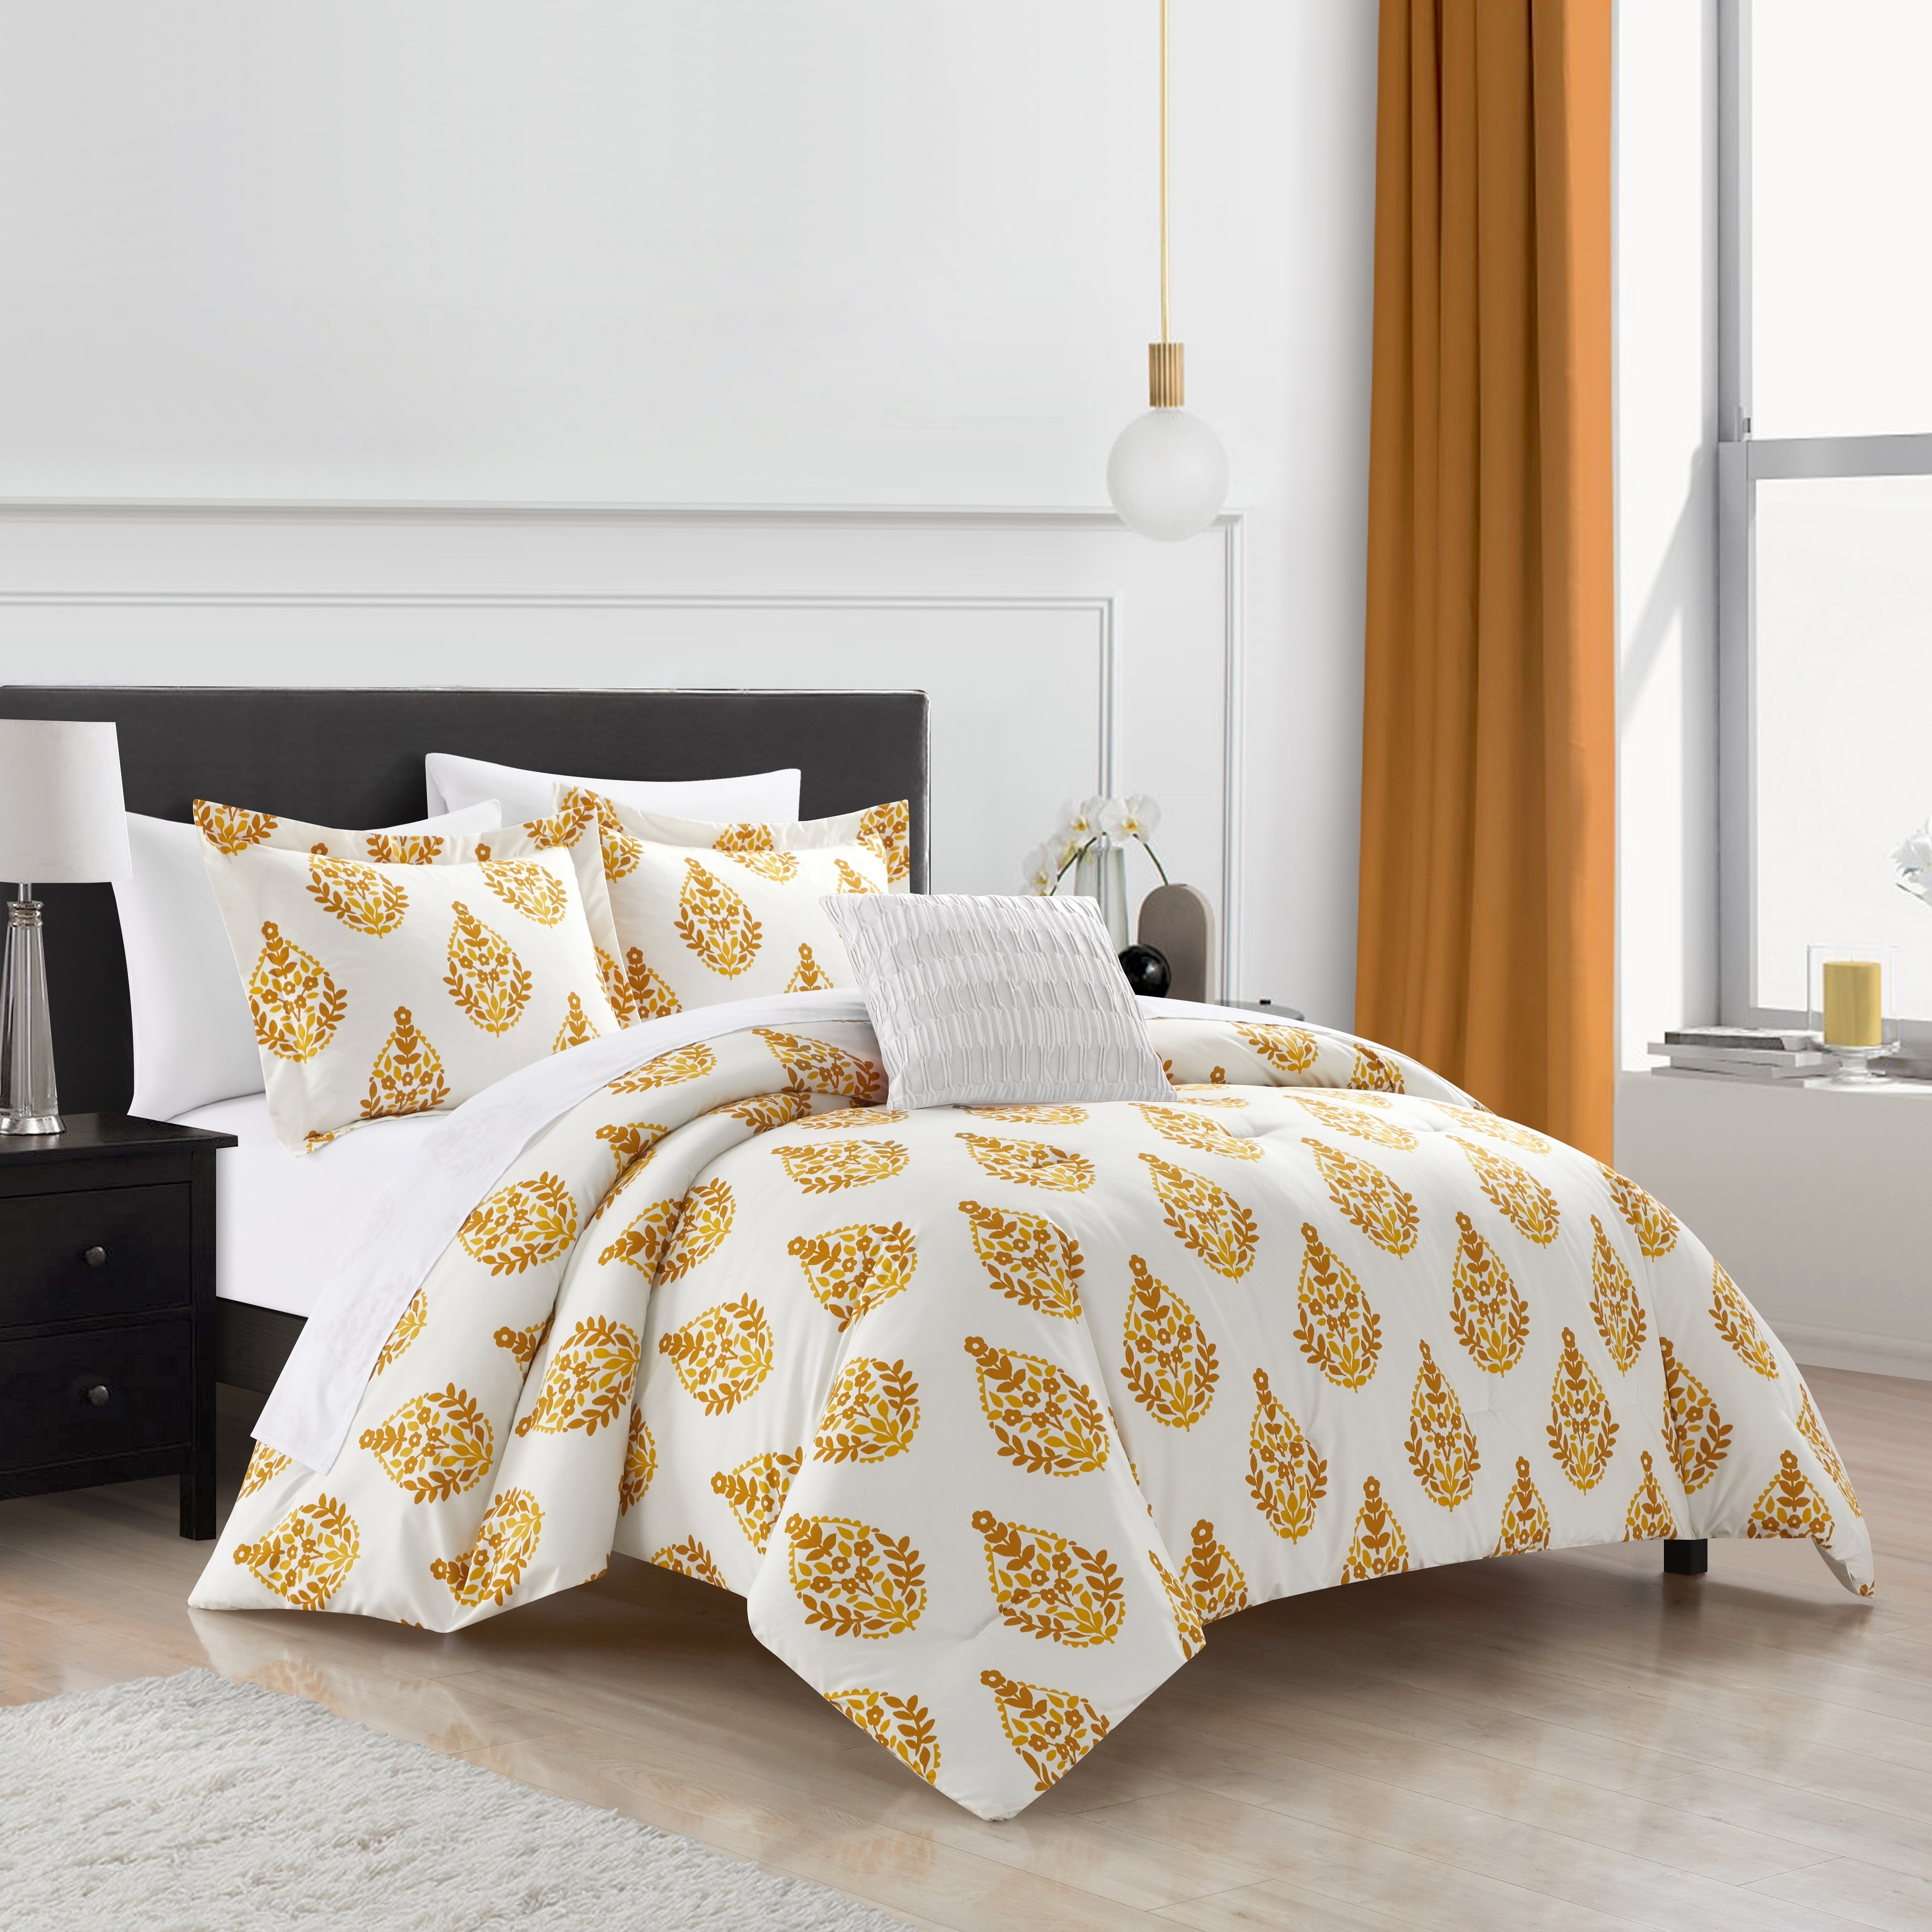 Clairessa 4 Or 3 Piece Comforter Set Floral Medallion Print Design Bedding - Yellow, King - 4 Piece